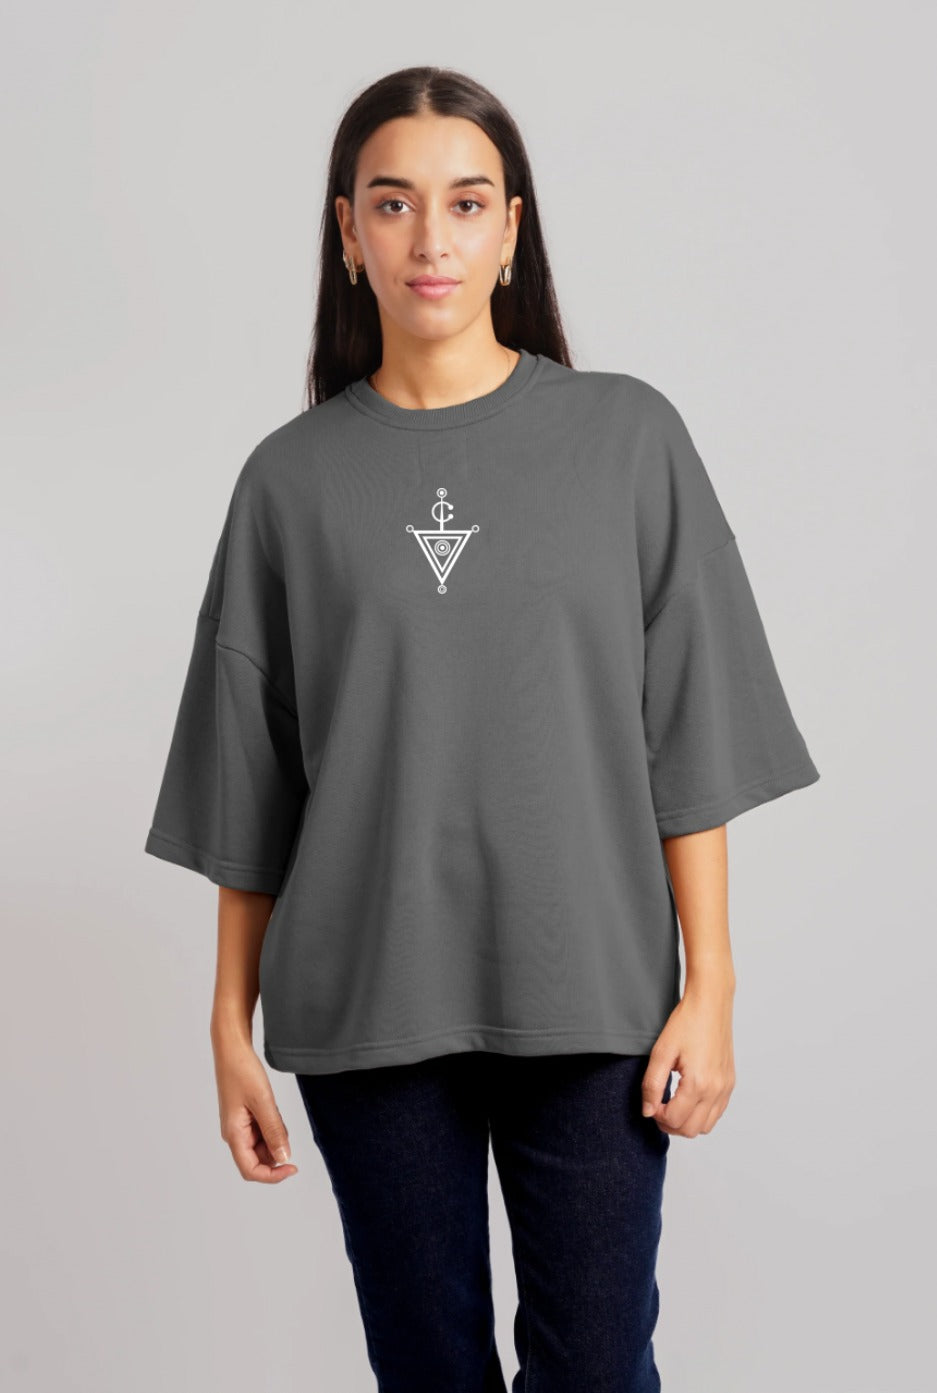 Khlala T-Shirt Oversize Charcoal (Women)